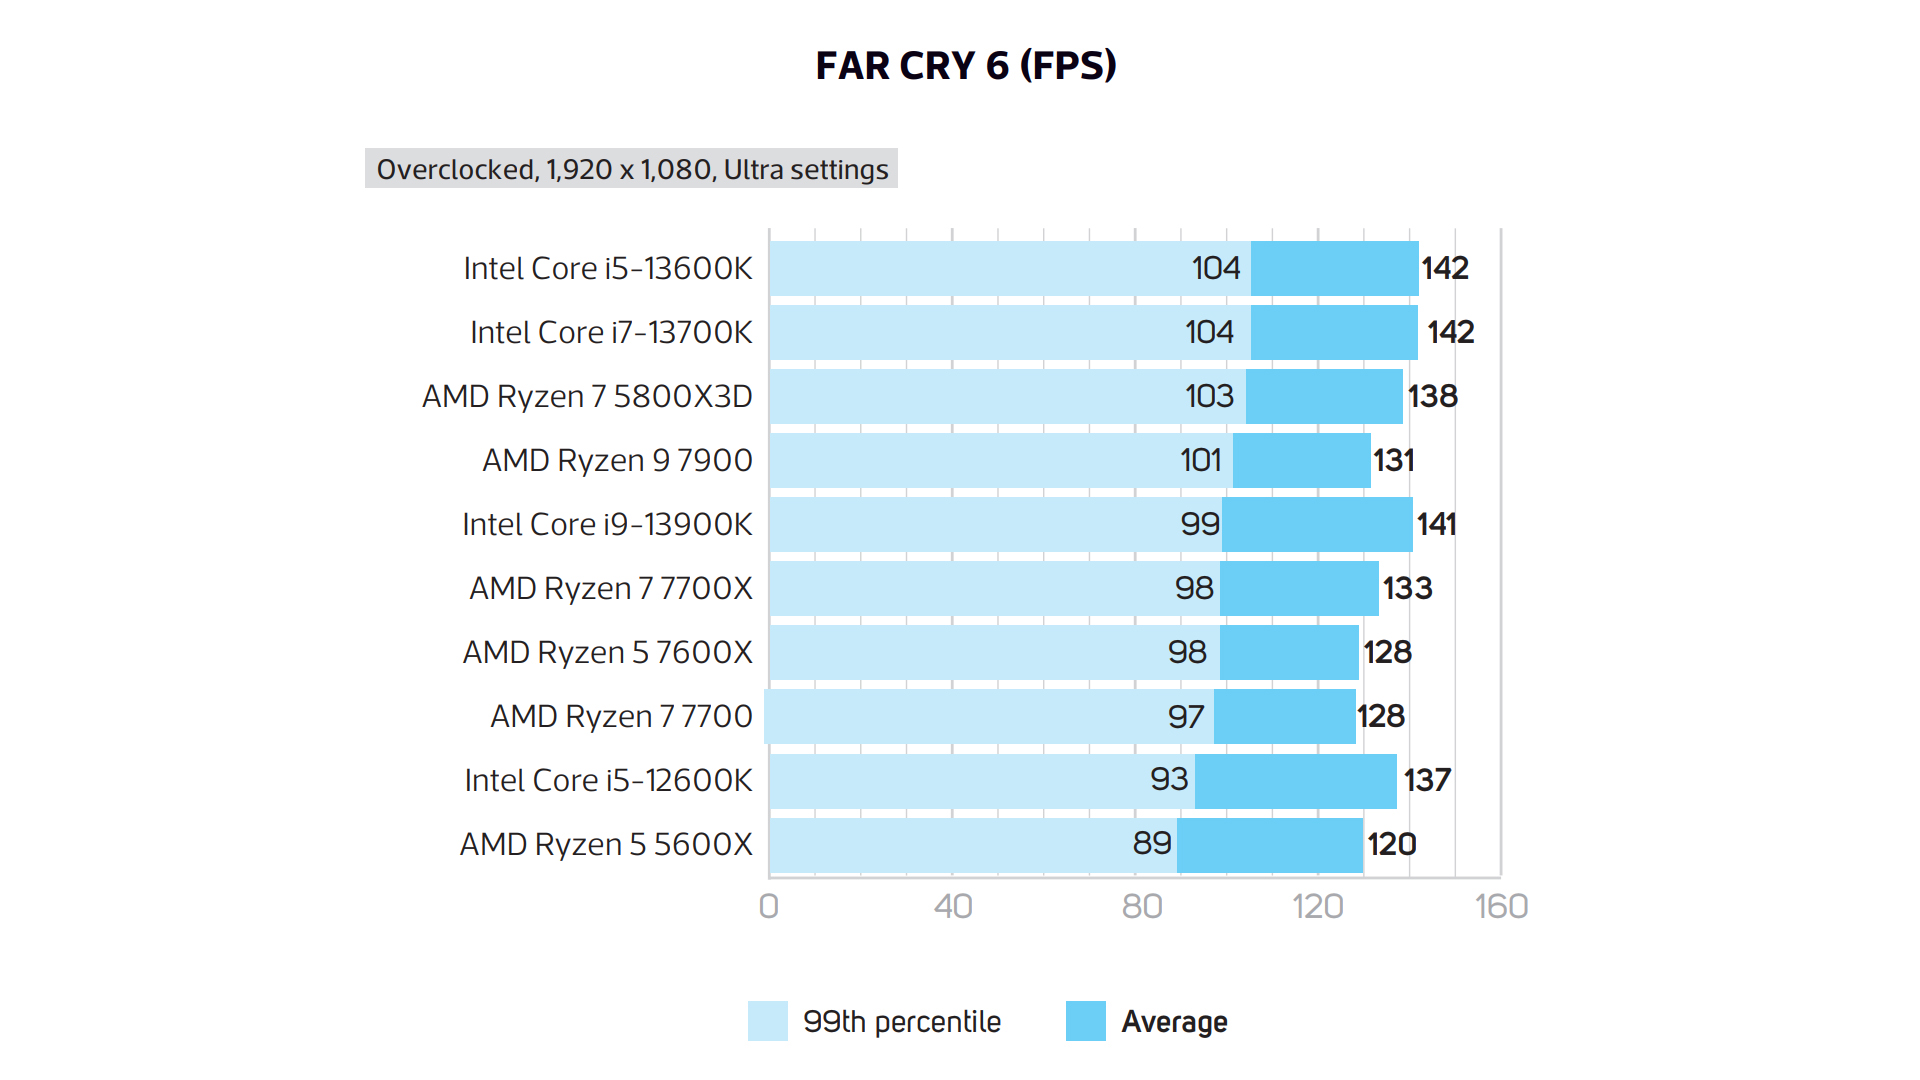 AMD Ryzen 5 7600X review